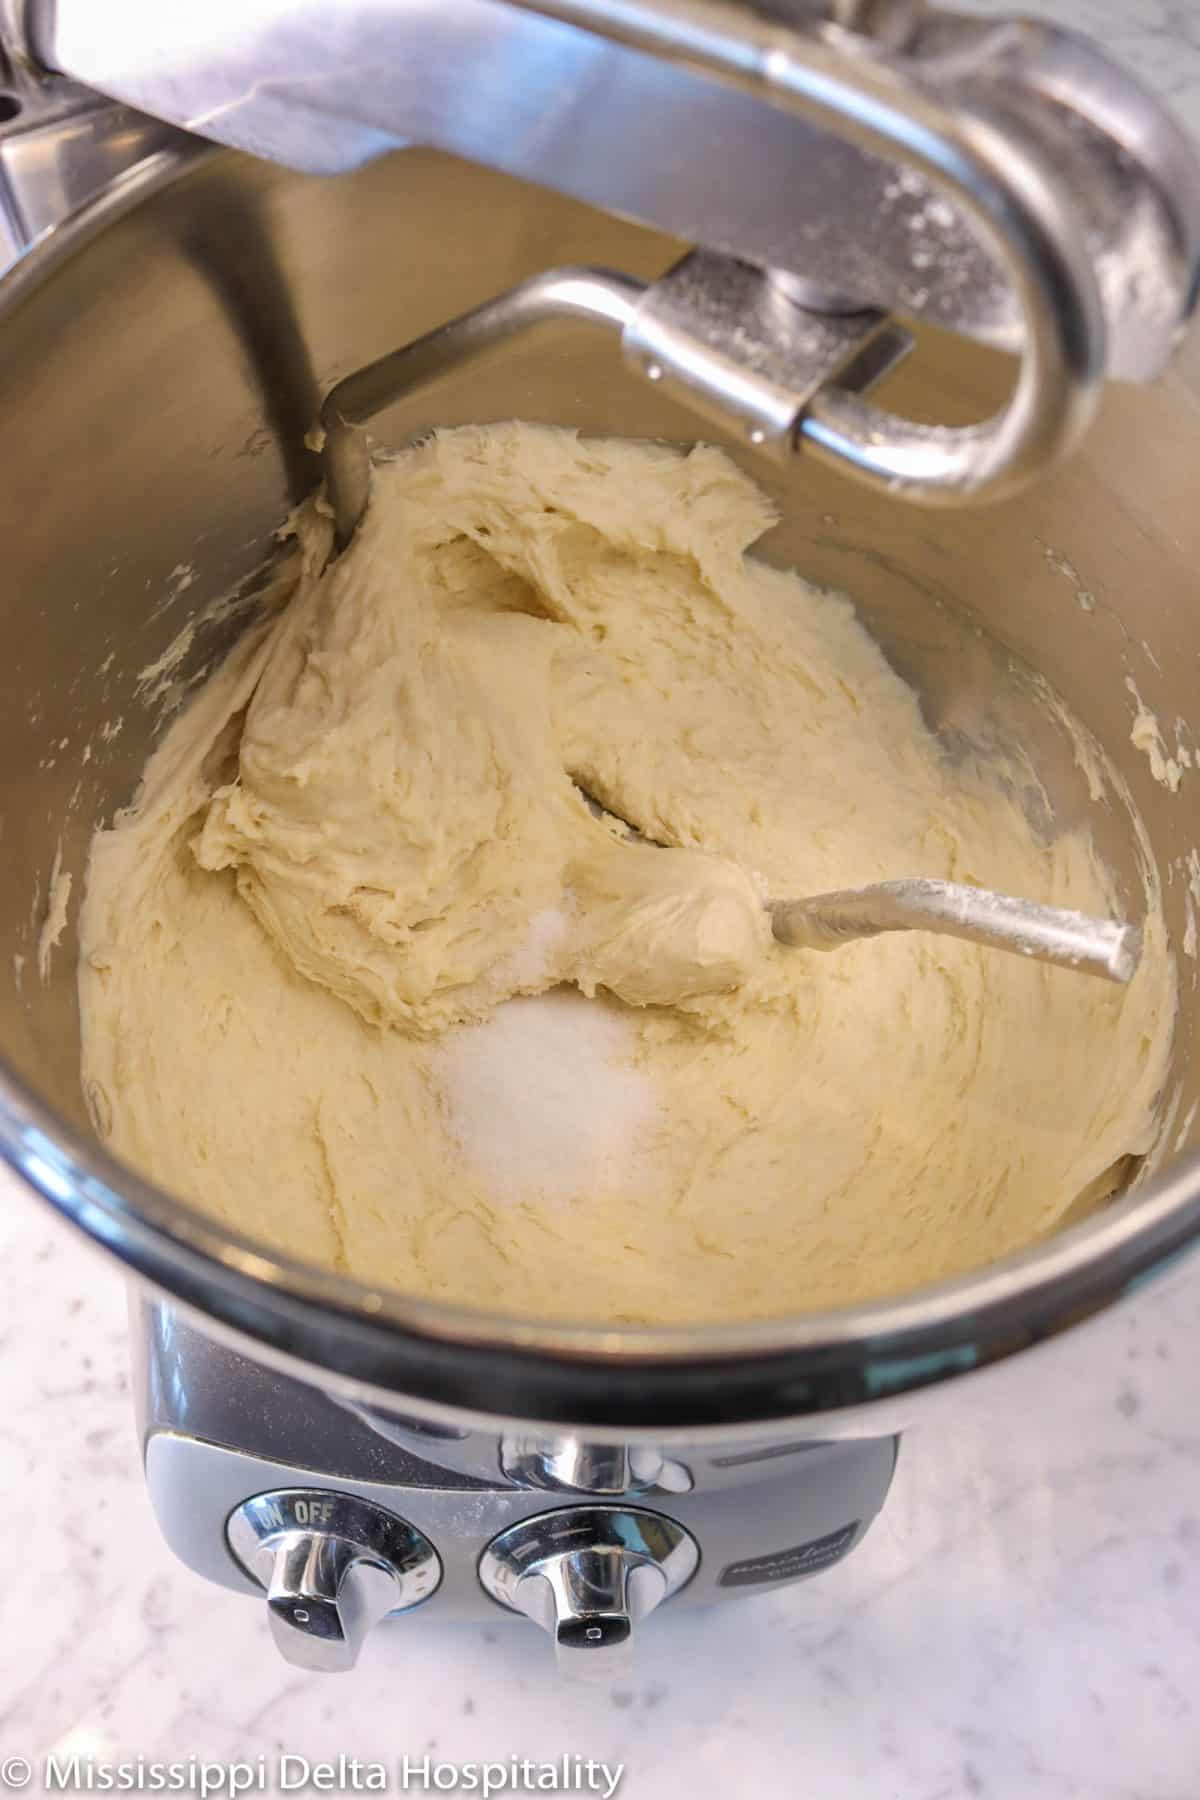 salt added to the rough dough